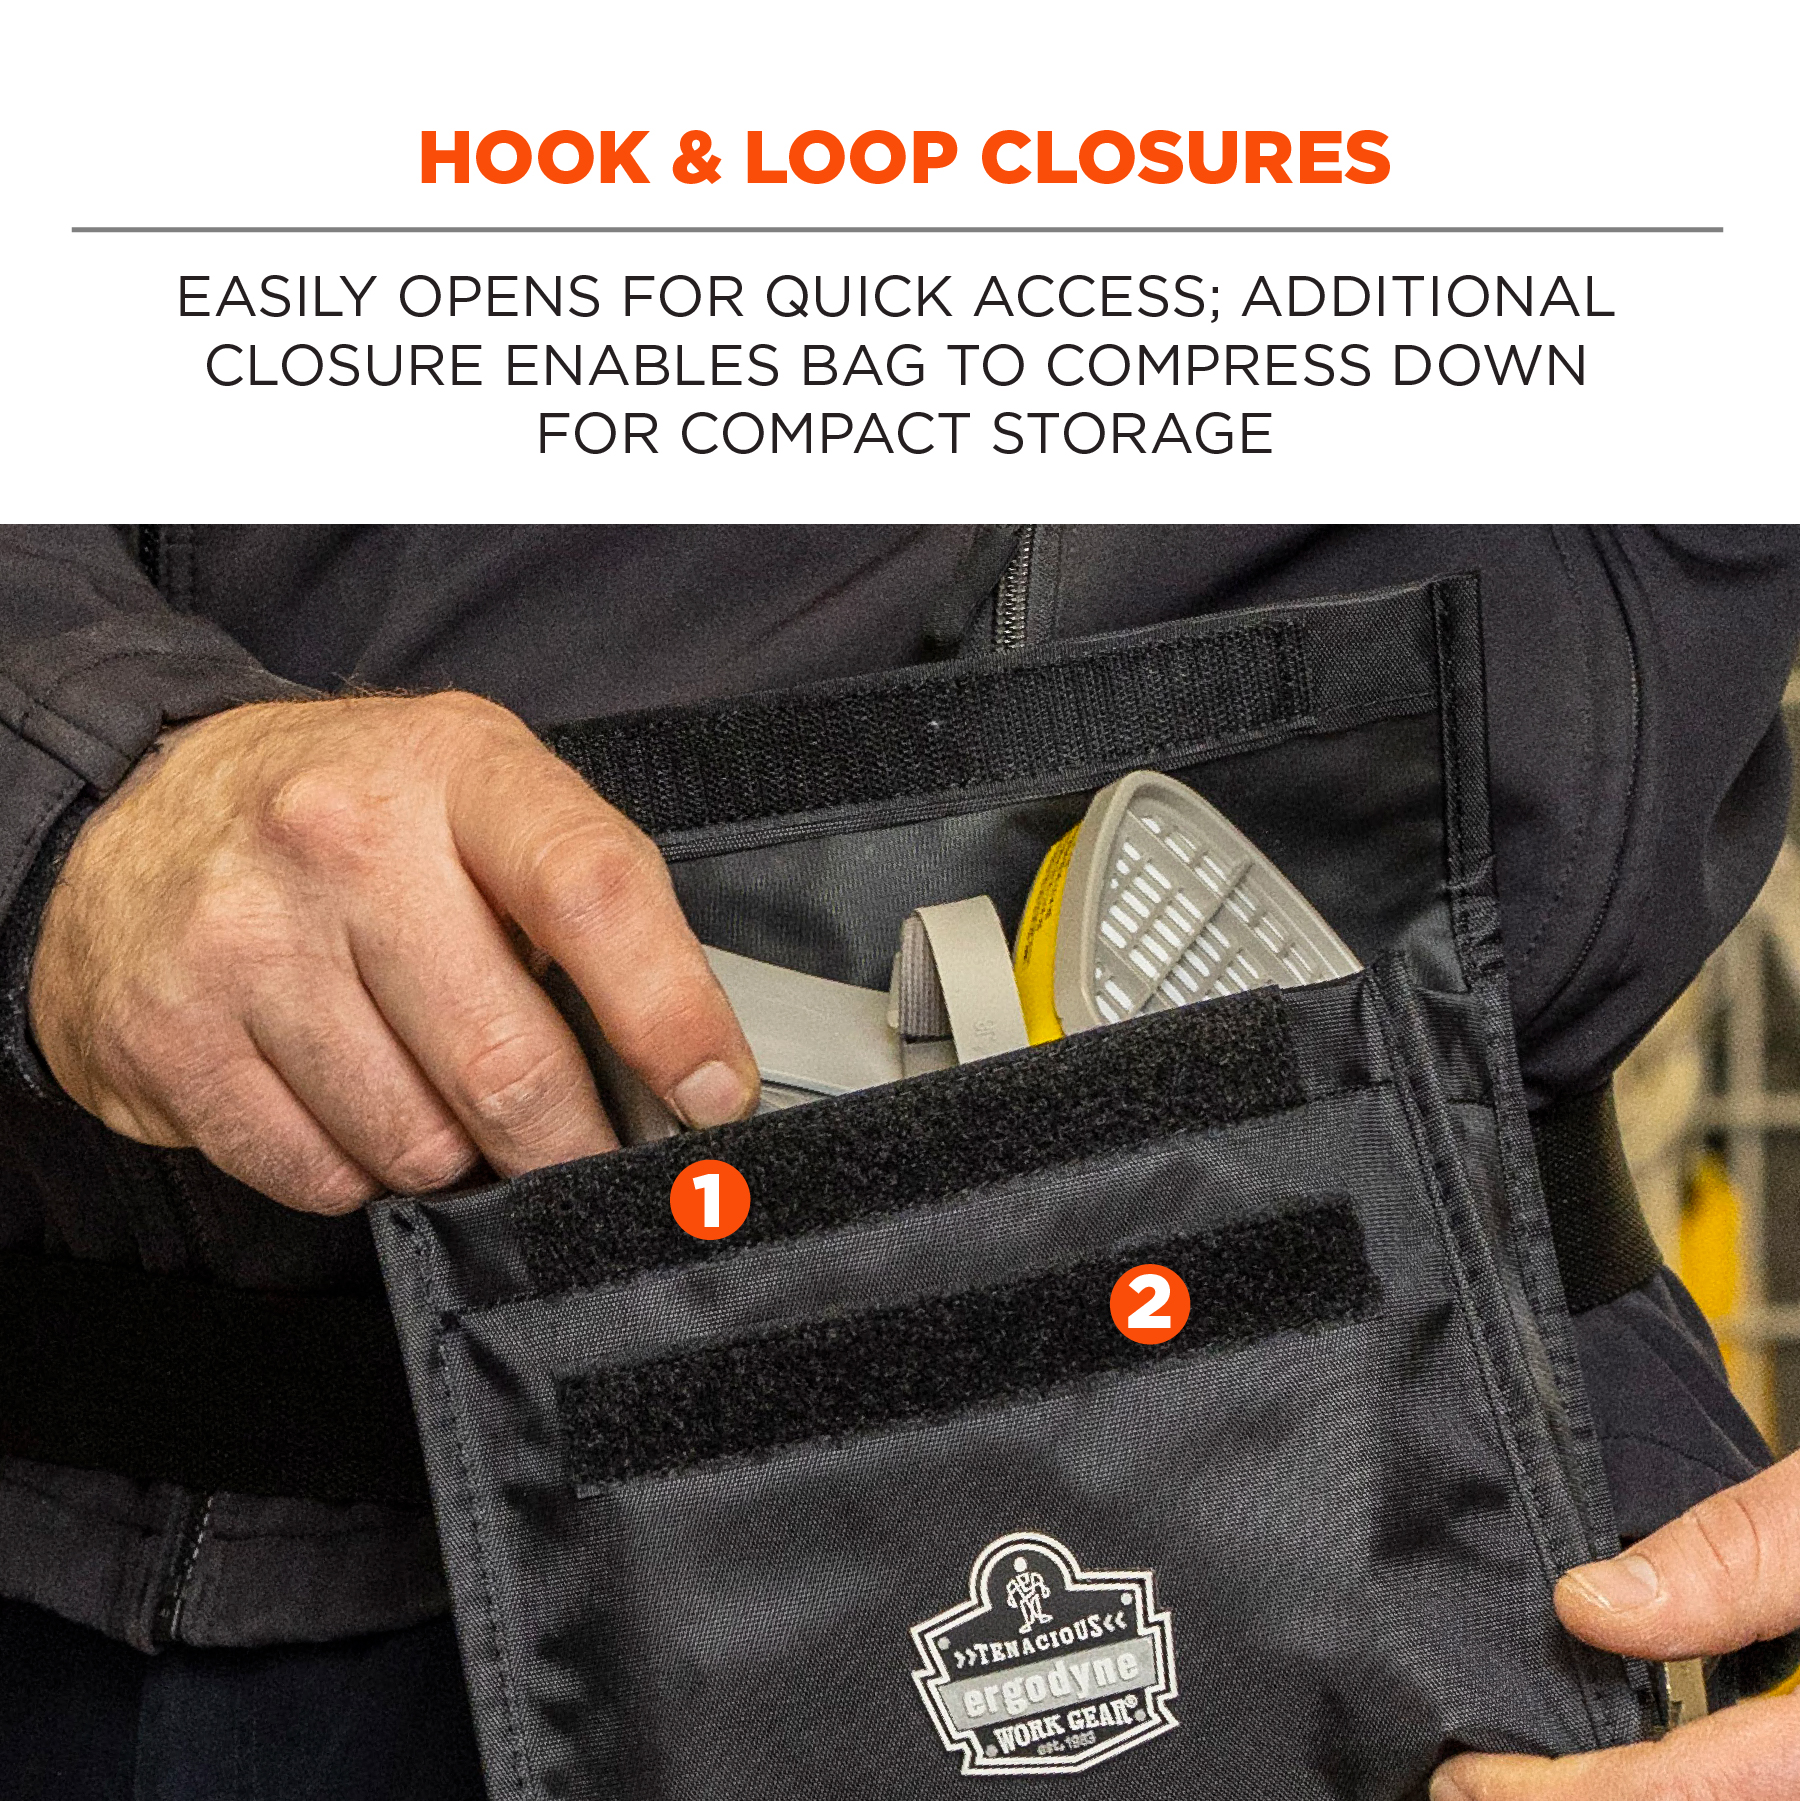 13180 5180 half face respirator bag black hook and loop closures